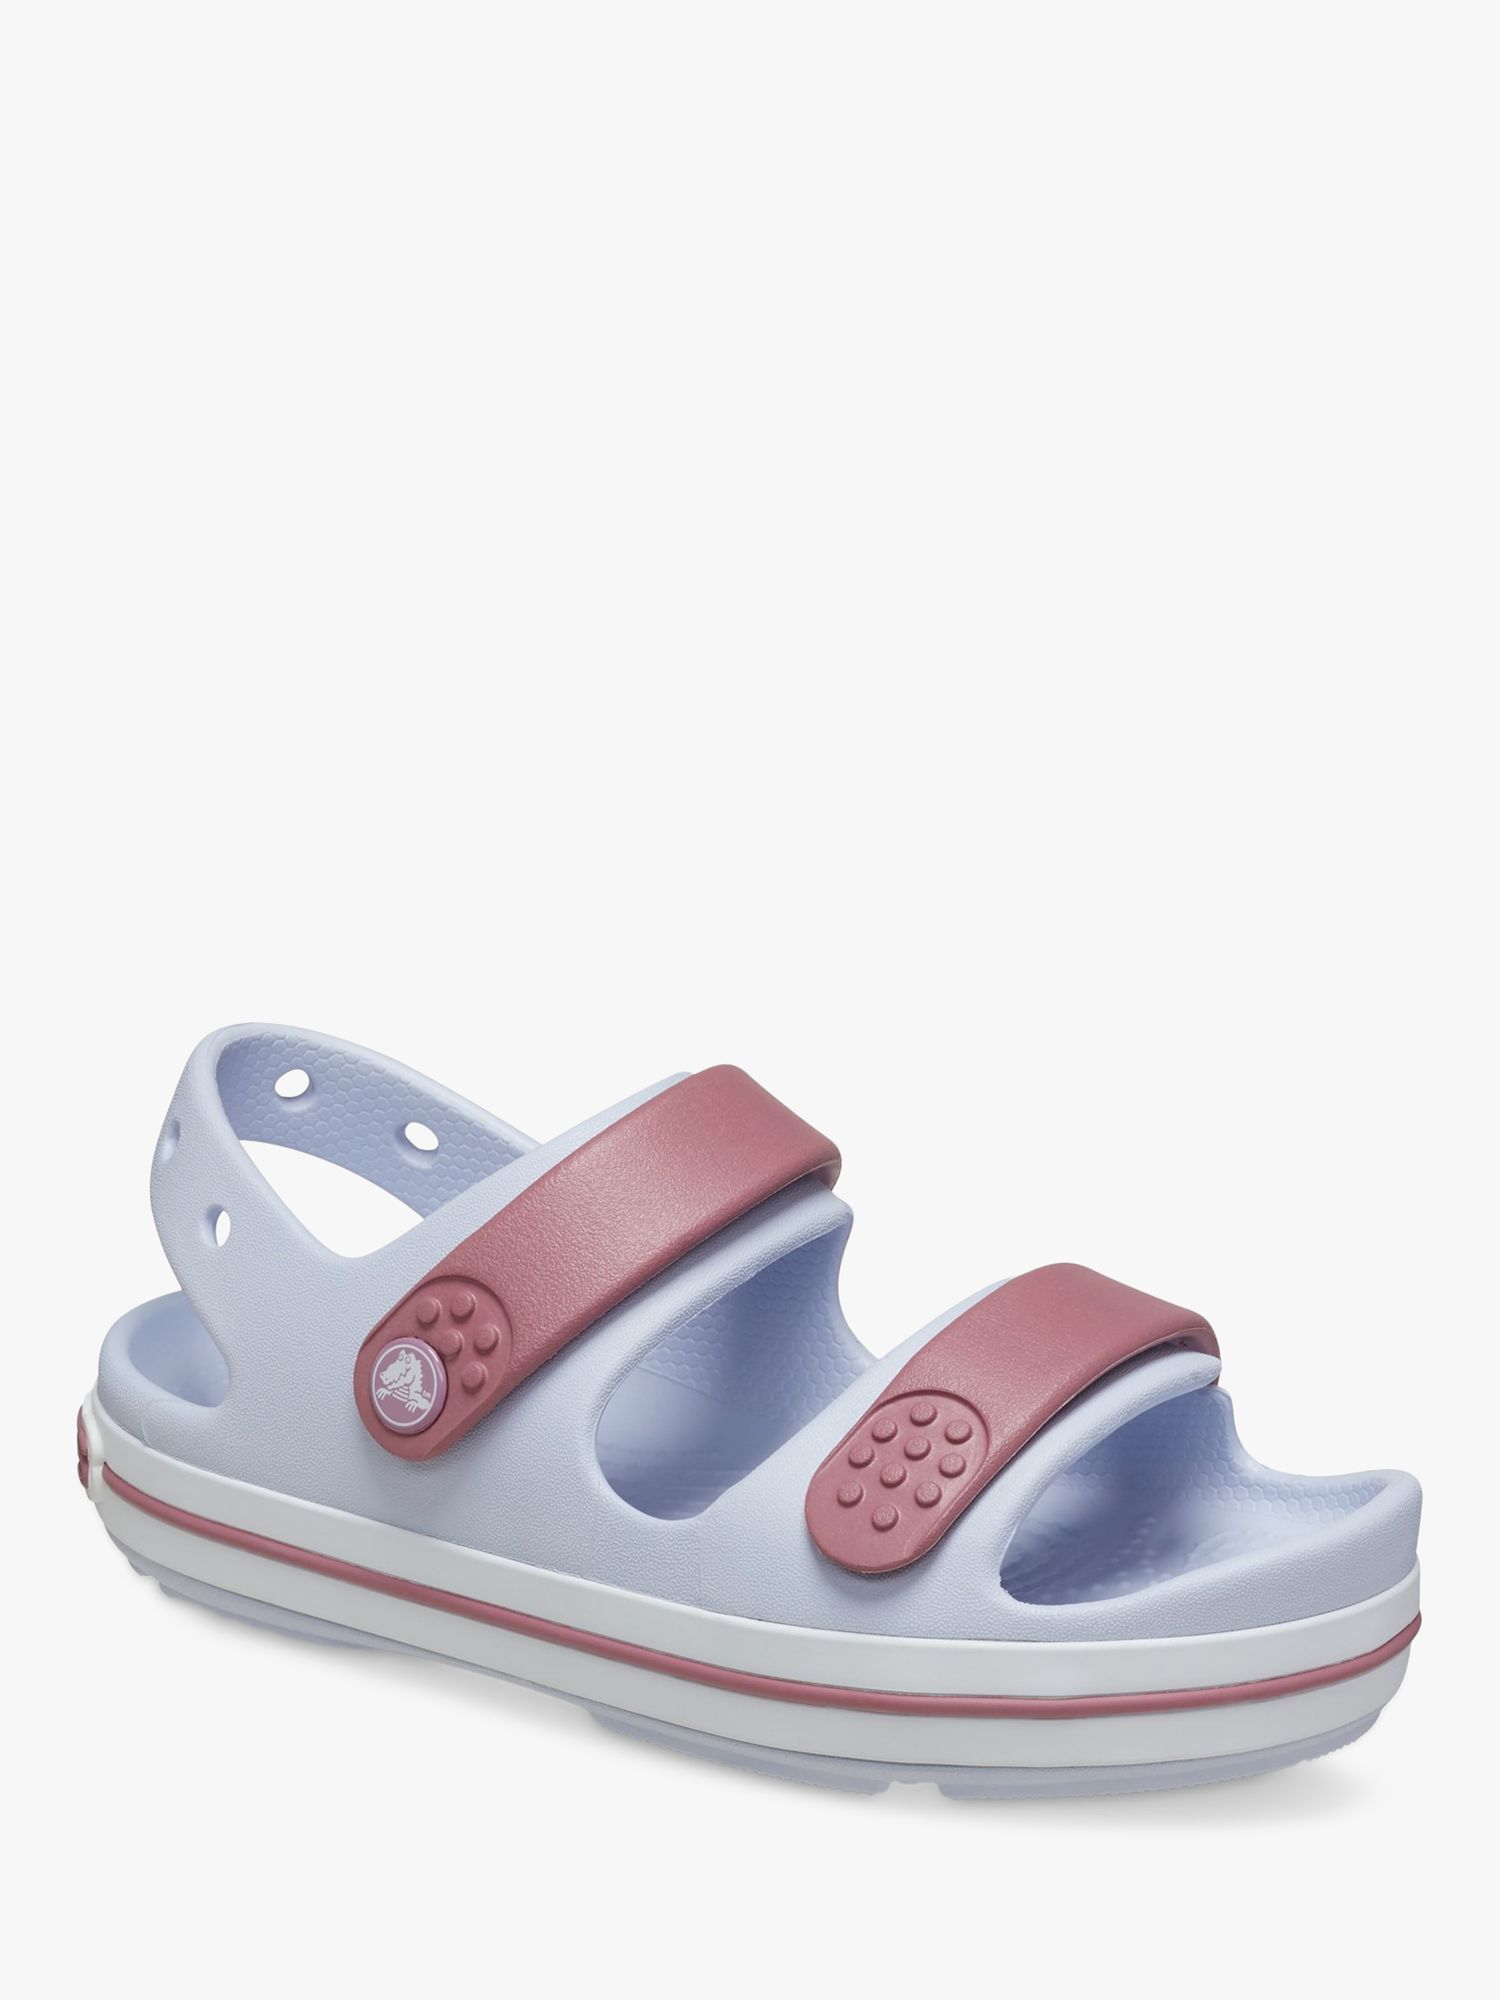 Buy Crocs Kids' Crocband Play Sandals Online at johnlewis.com